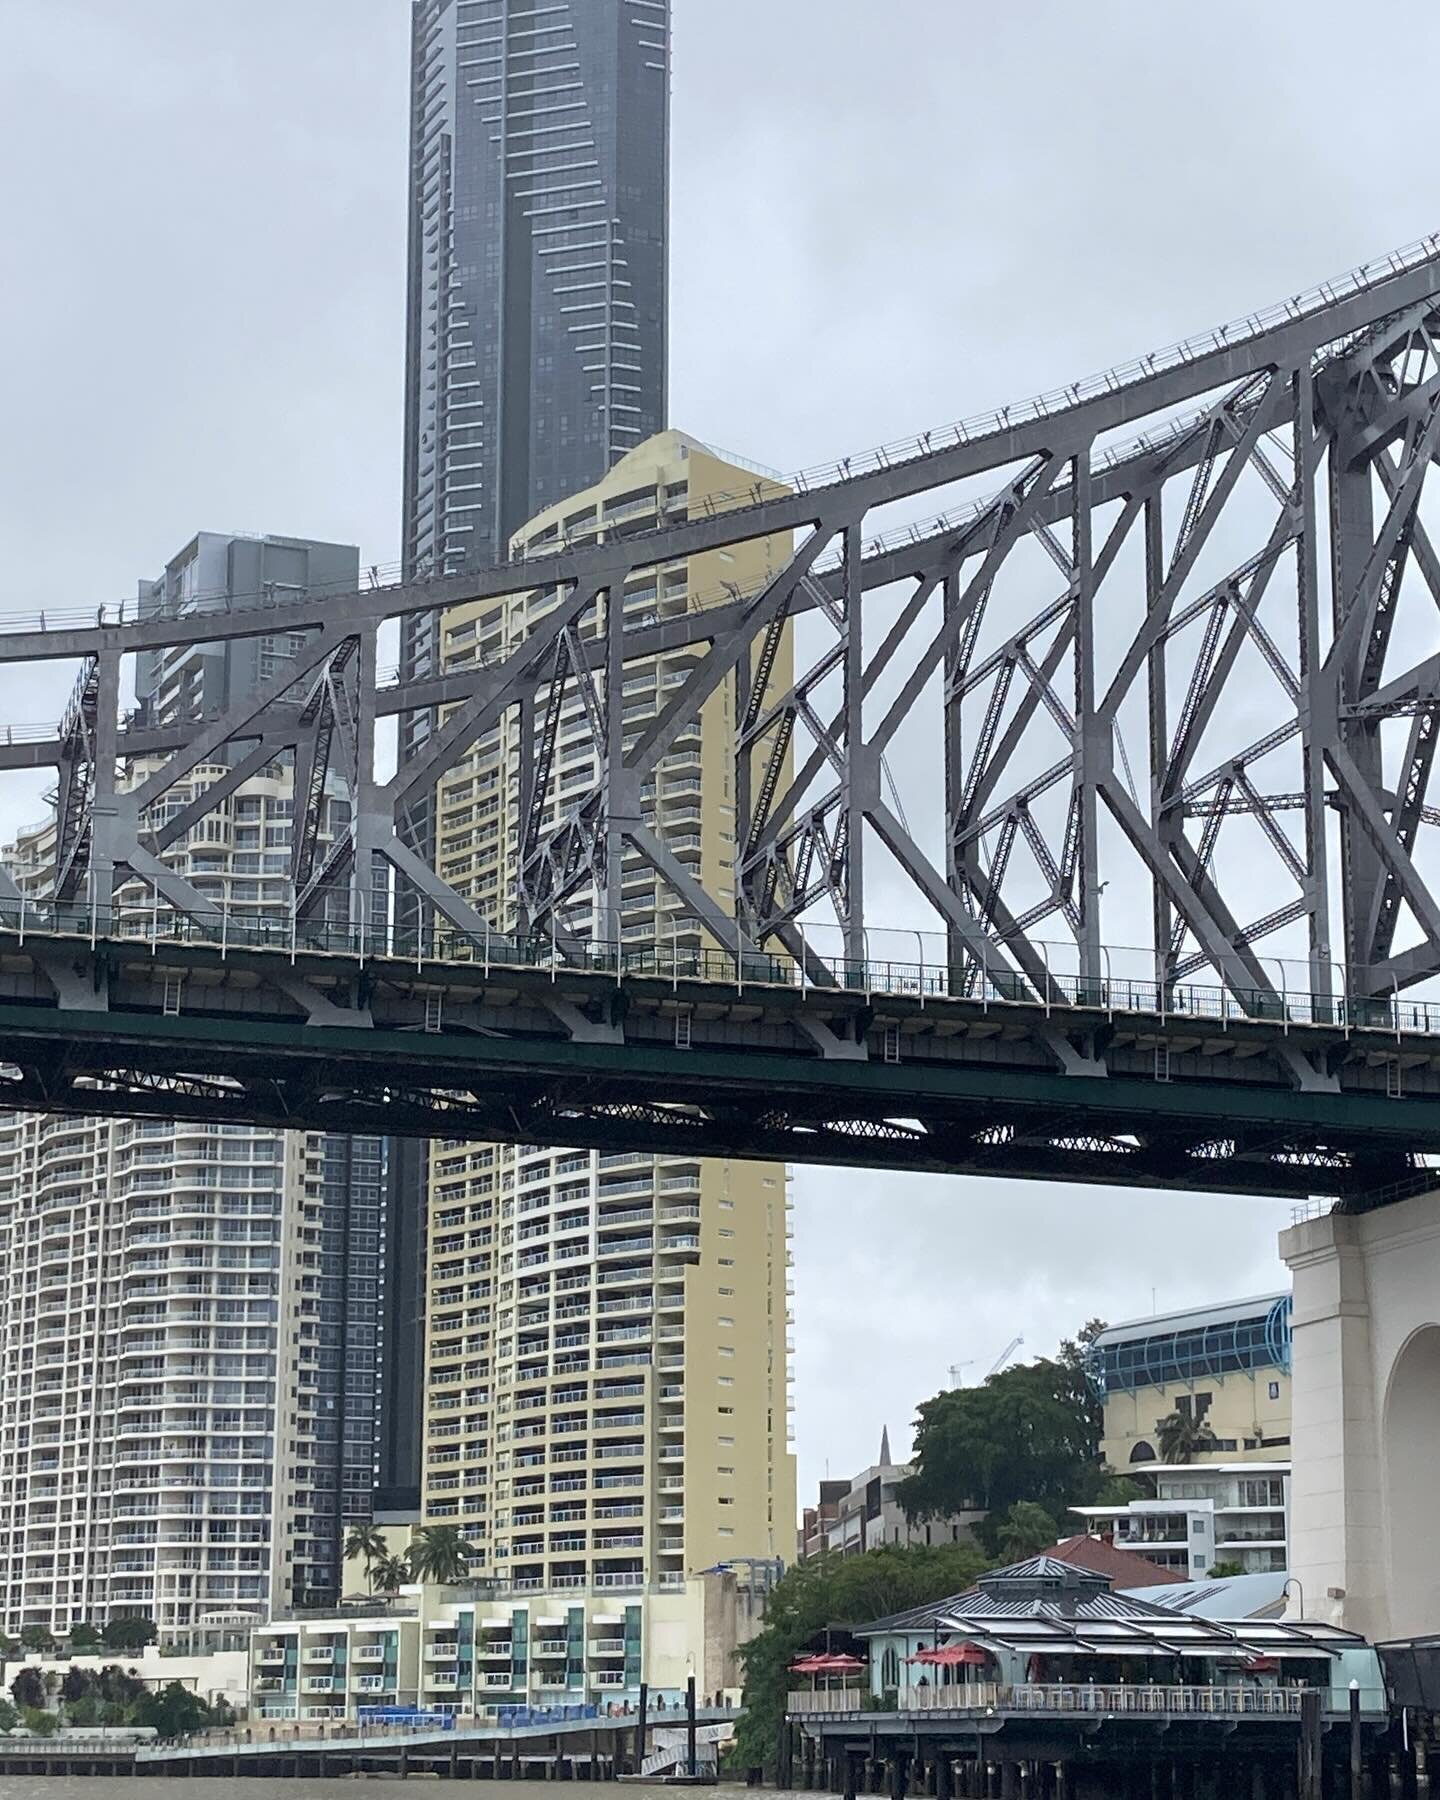 Dismal &amp; grey in Brisbane city today.